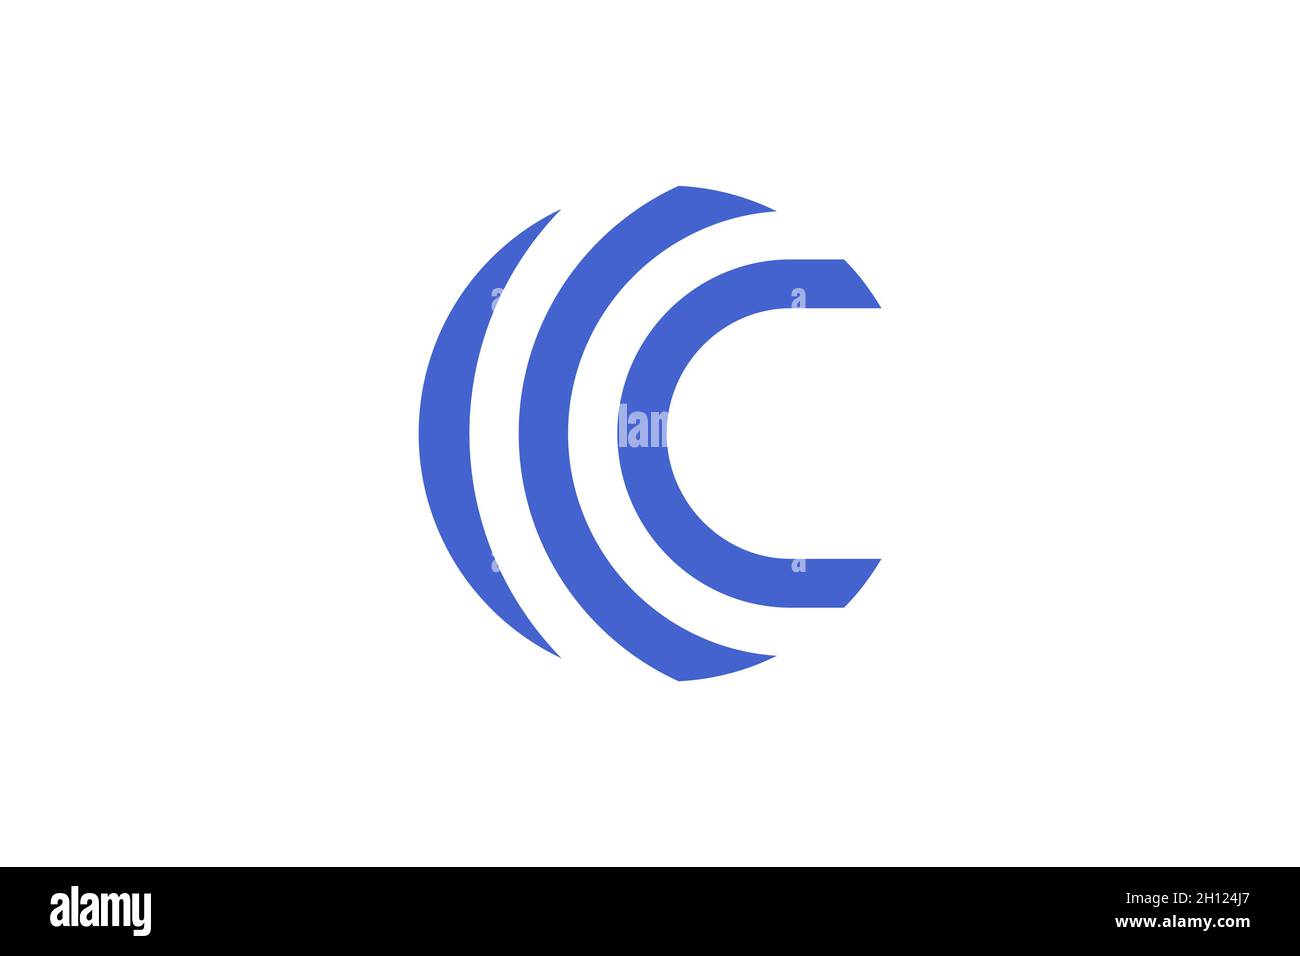 Sphere letter C logo design concept template. Stock Vector